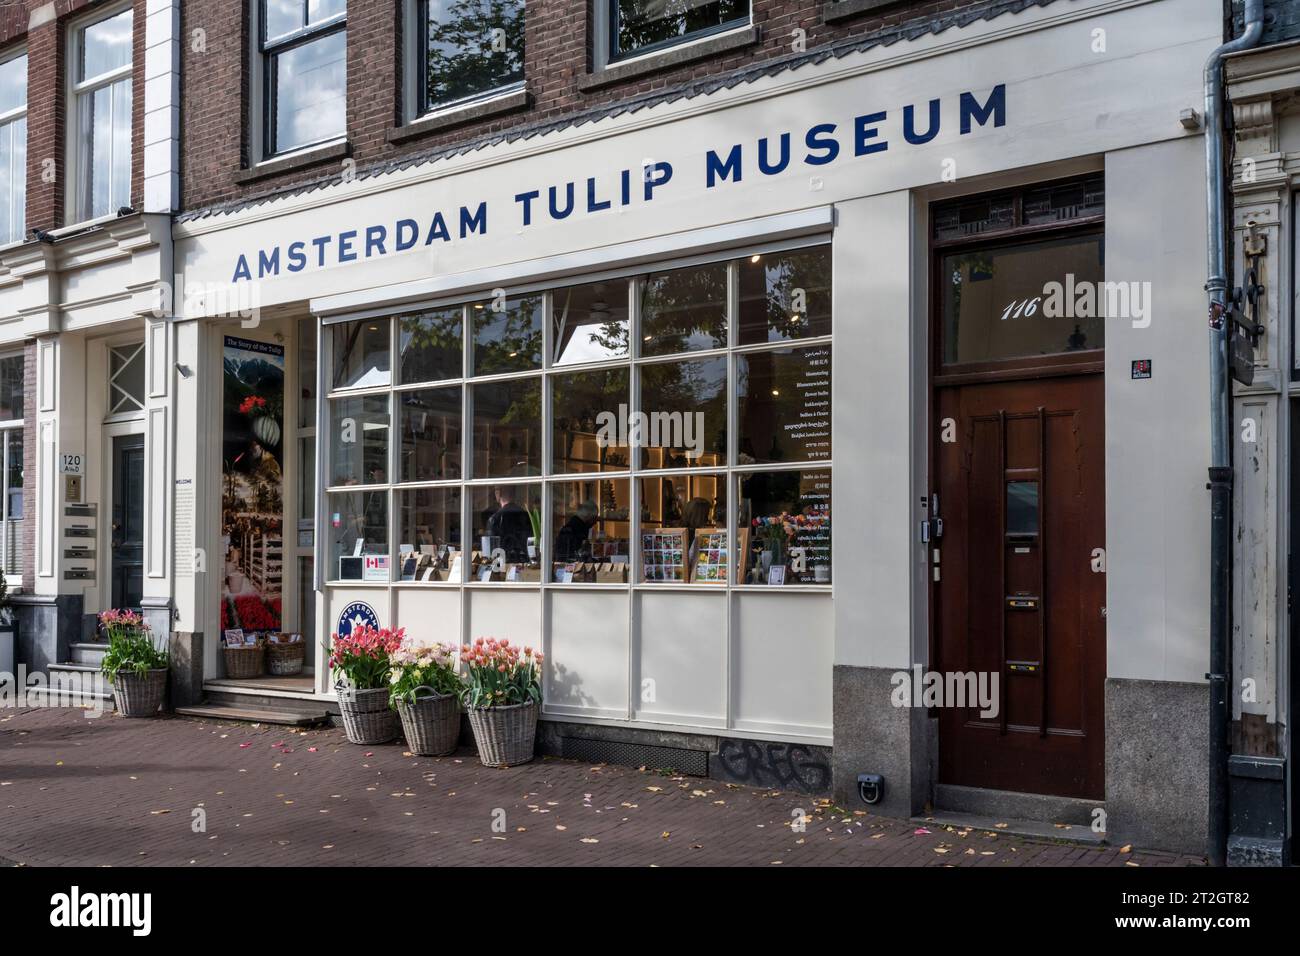 The Amsterdam Tulip museum on Prinsengracht, Amsterdam. Stock Photo